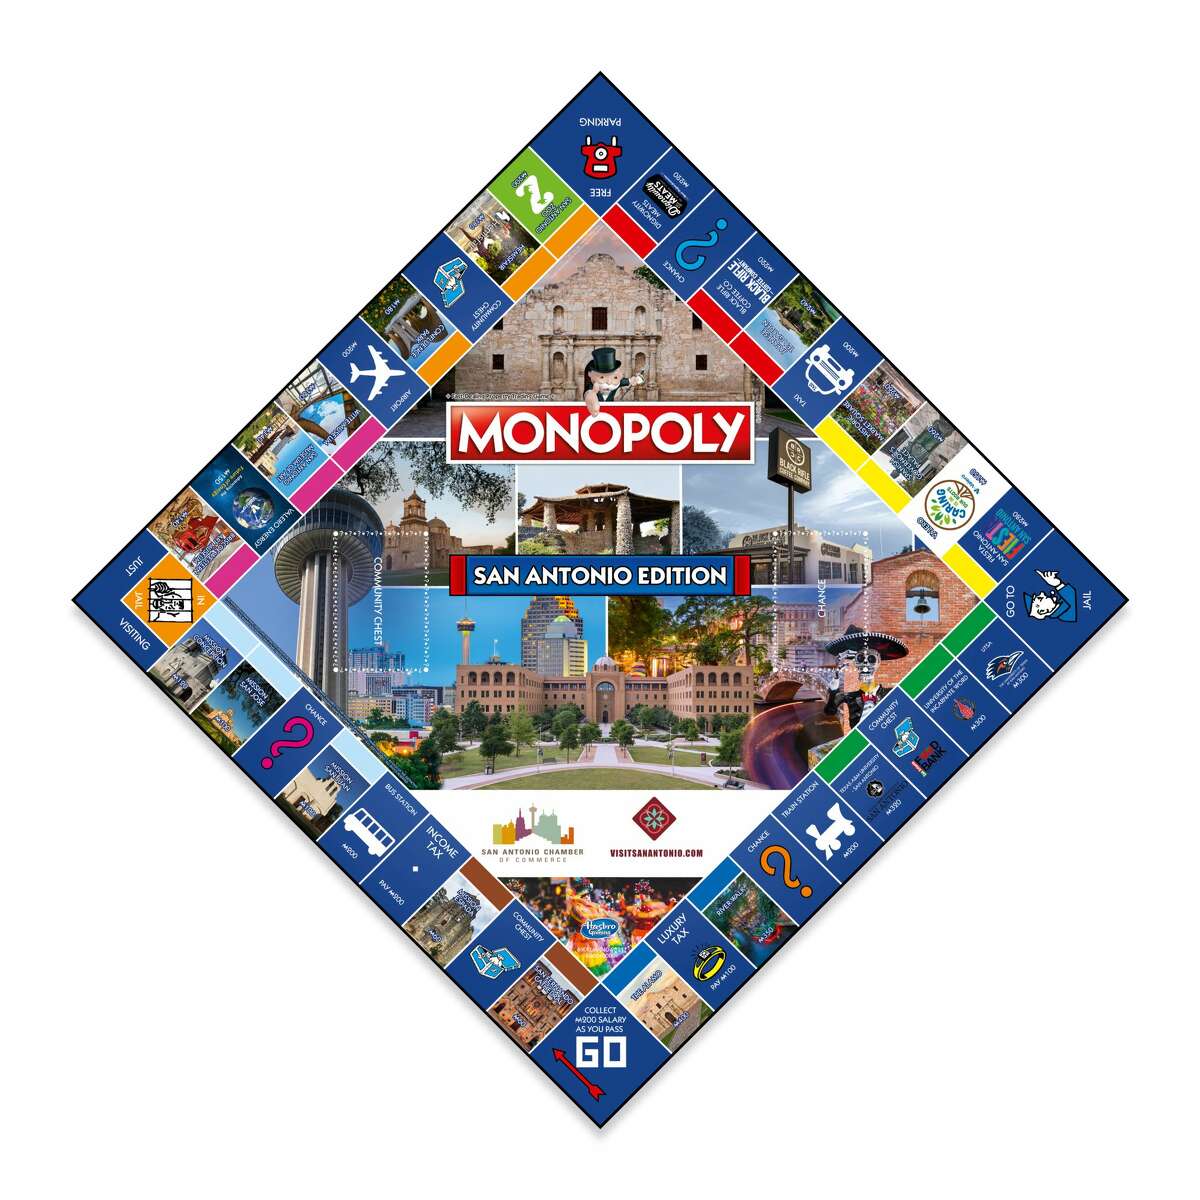 The San Antonio Monopoly board. 